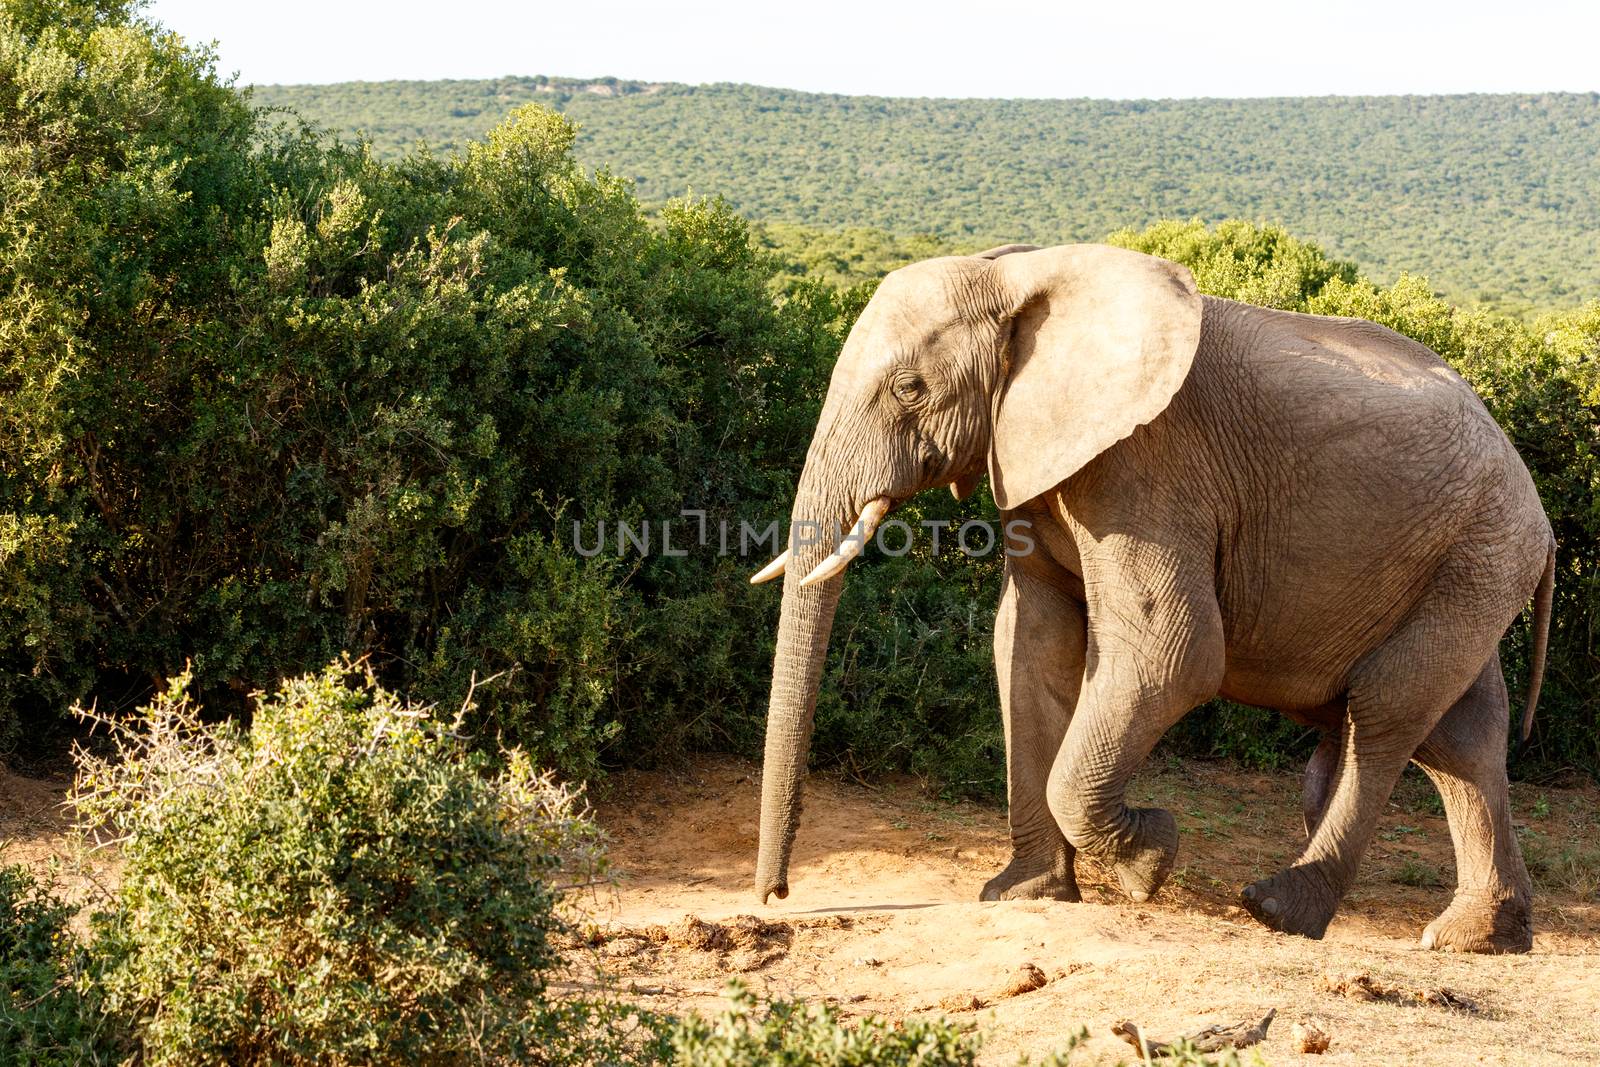 The African bush elephant Elephant taking a walk through the bush